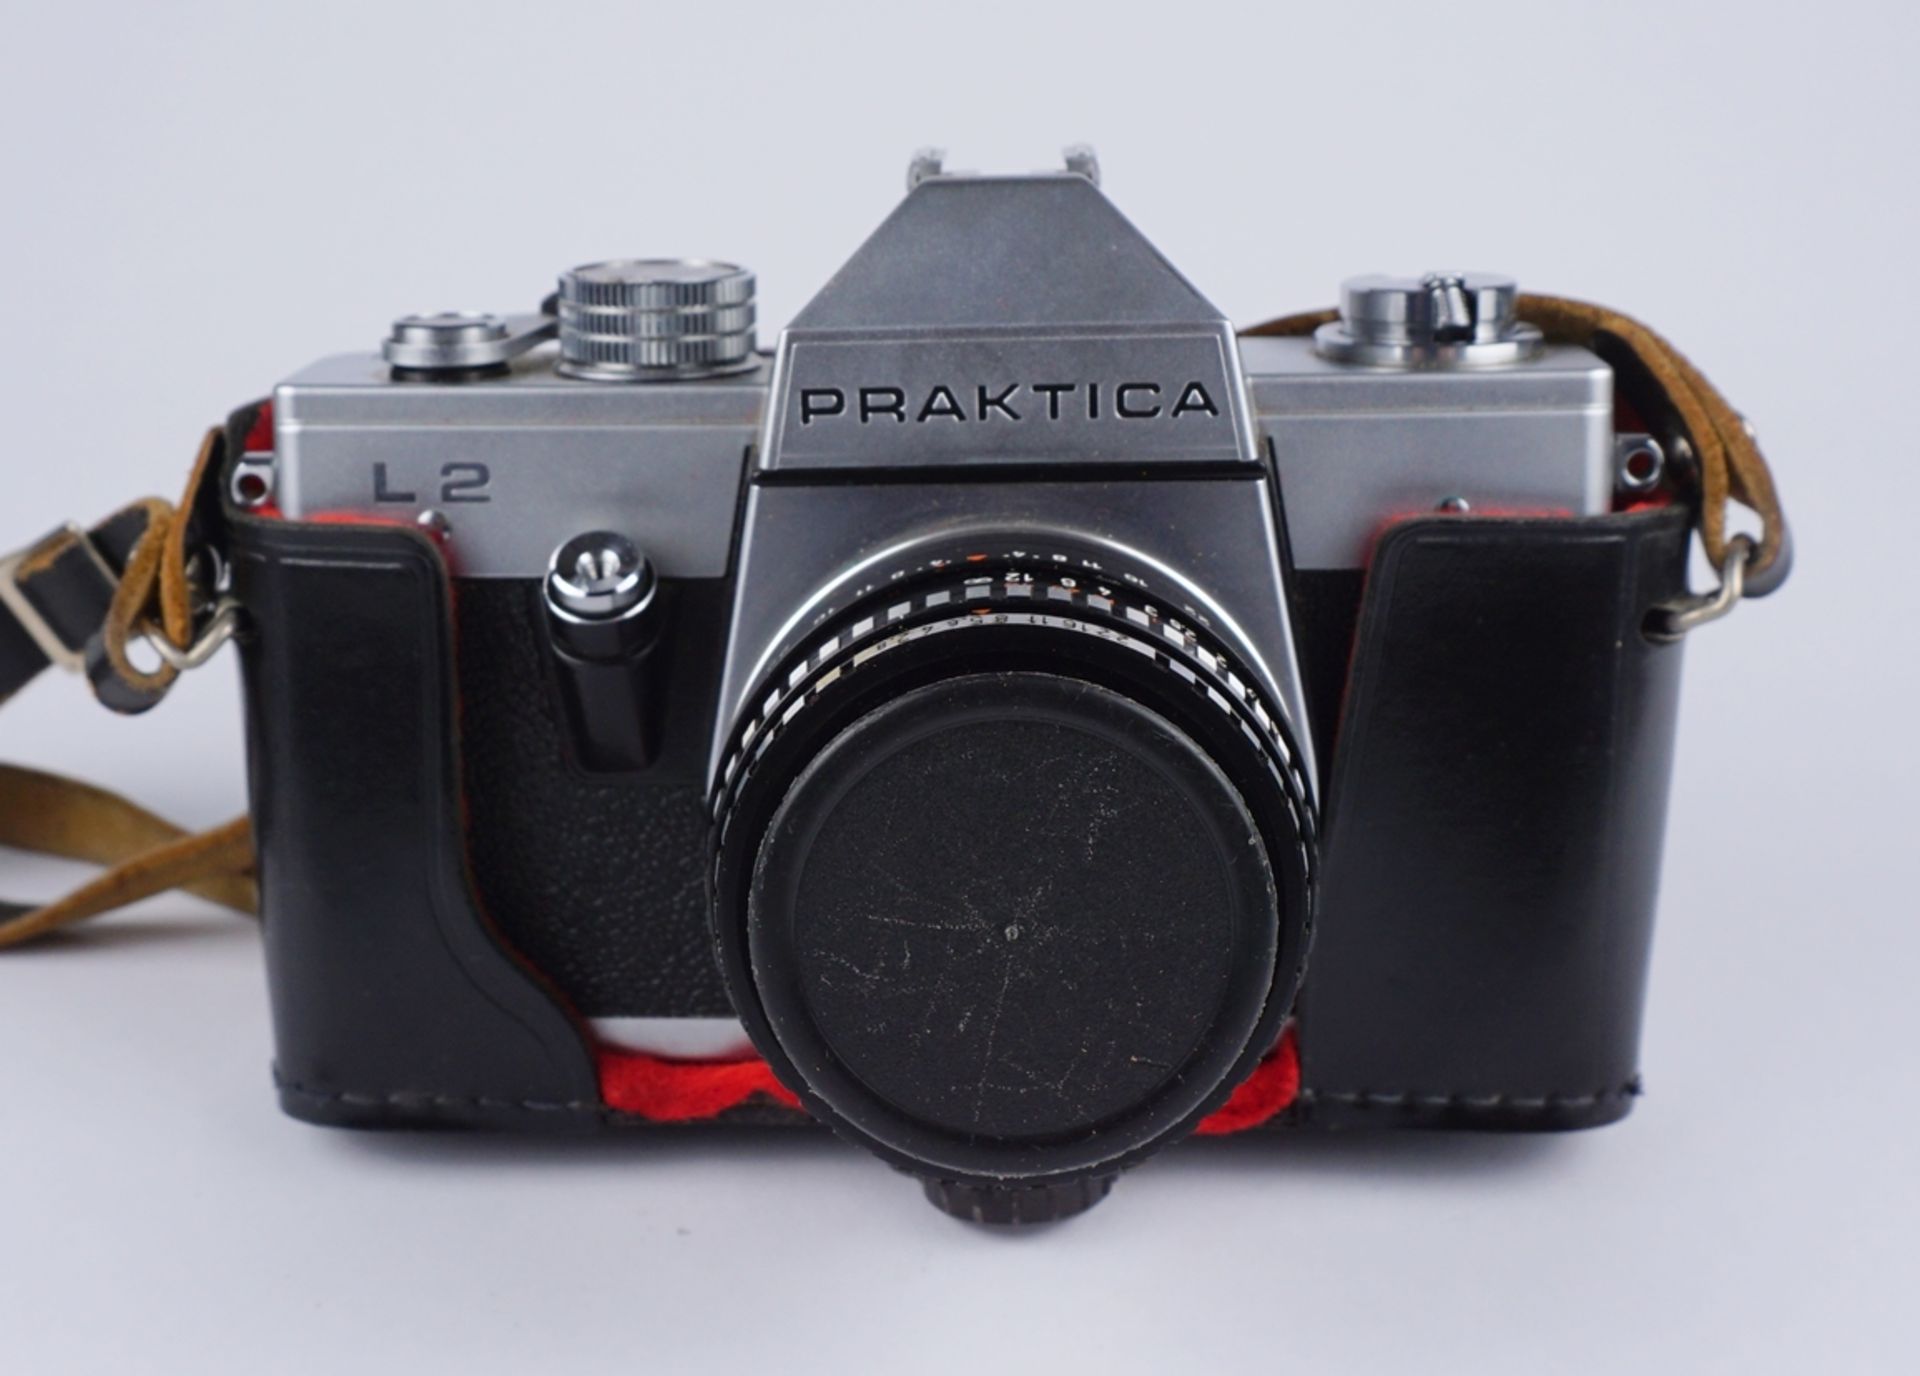 Spiegelreflexkamera Praktica L2, 1970er Jahre, DDR - Image 3 of 3